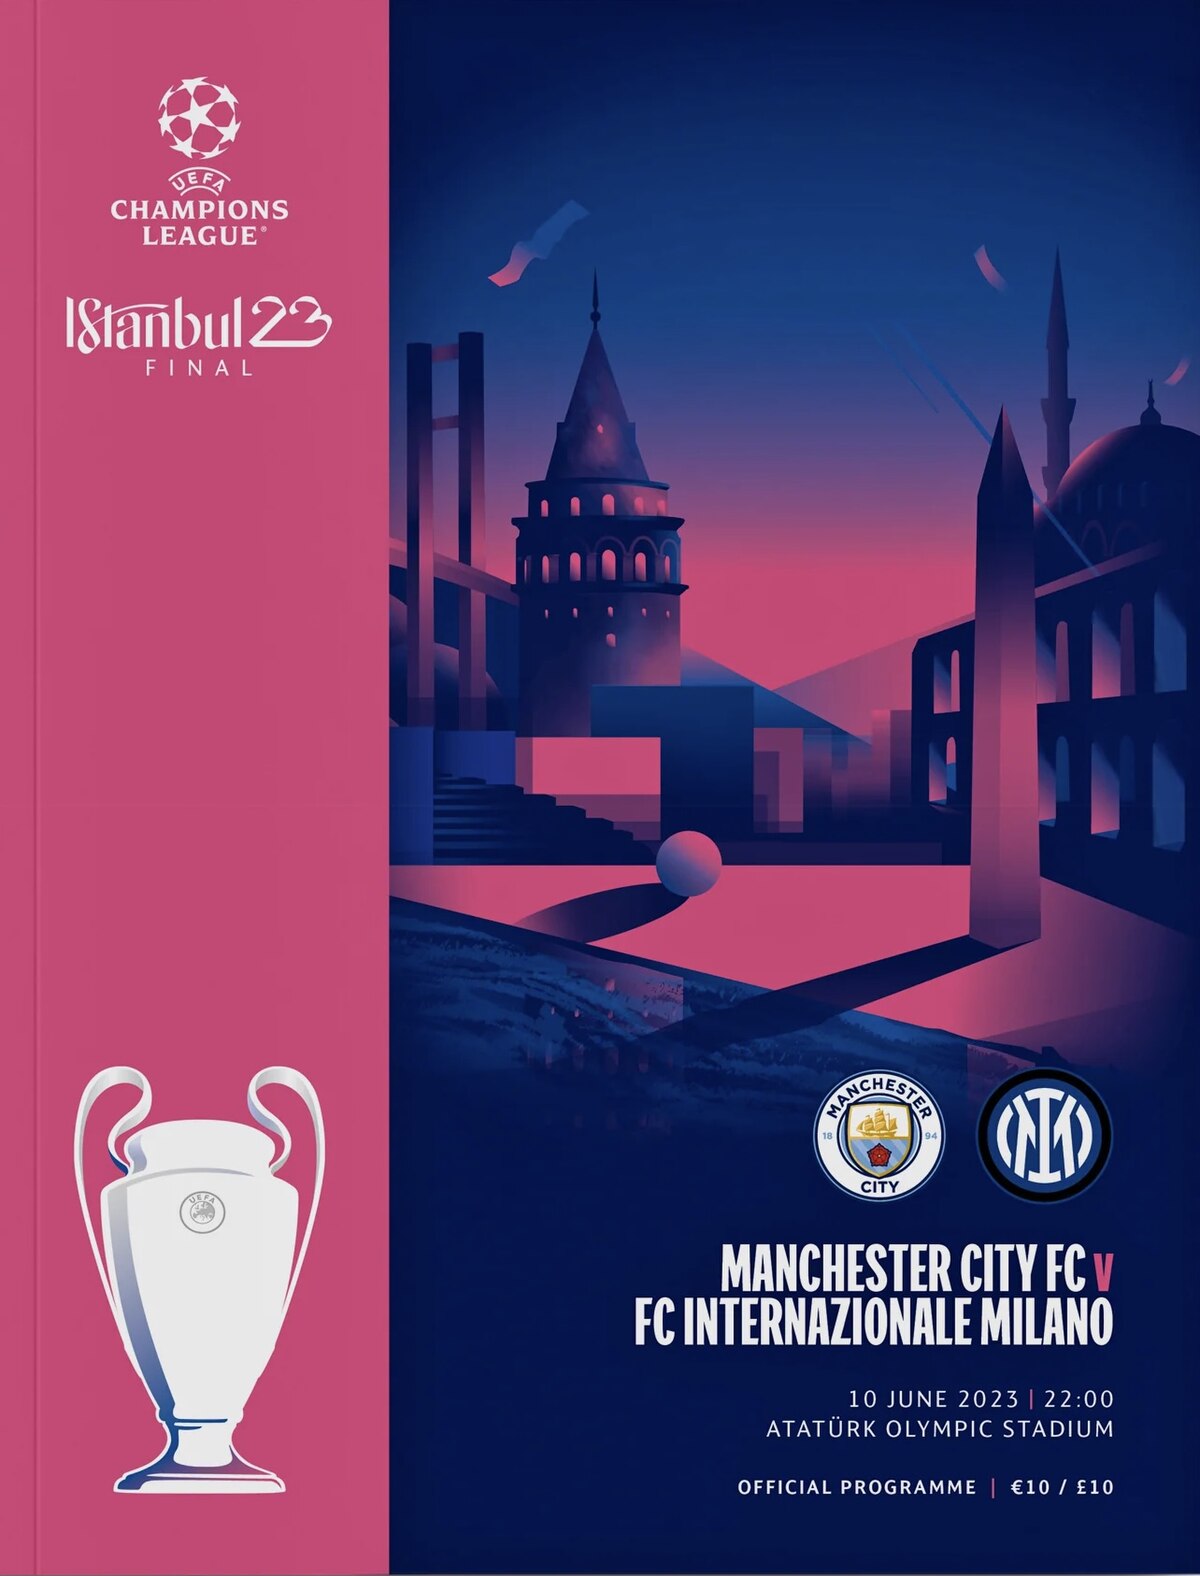 Champions League Final 2023 - Official Programme